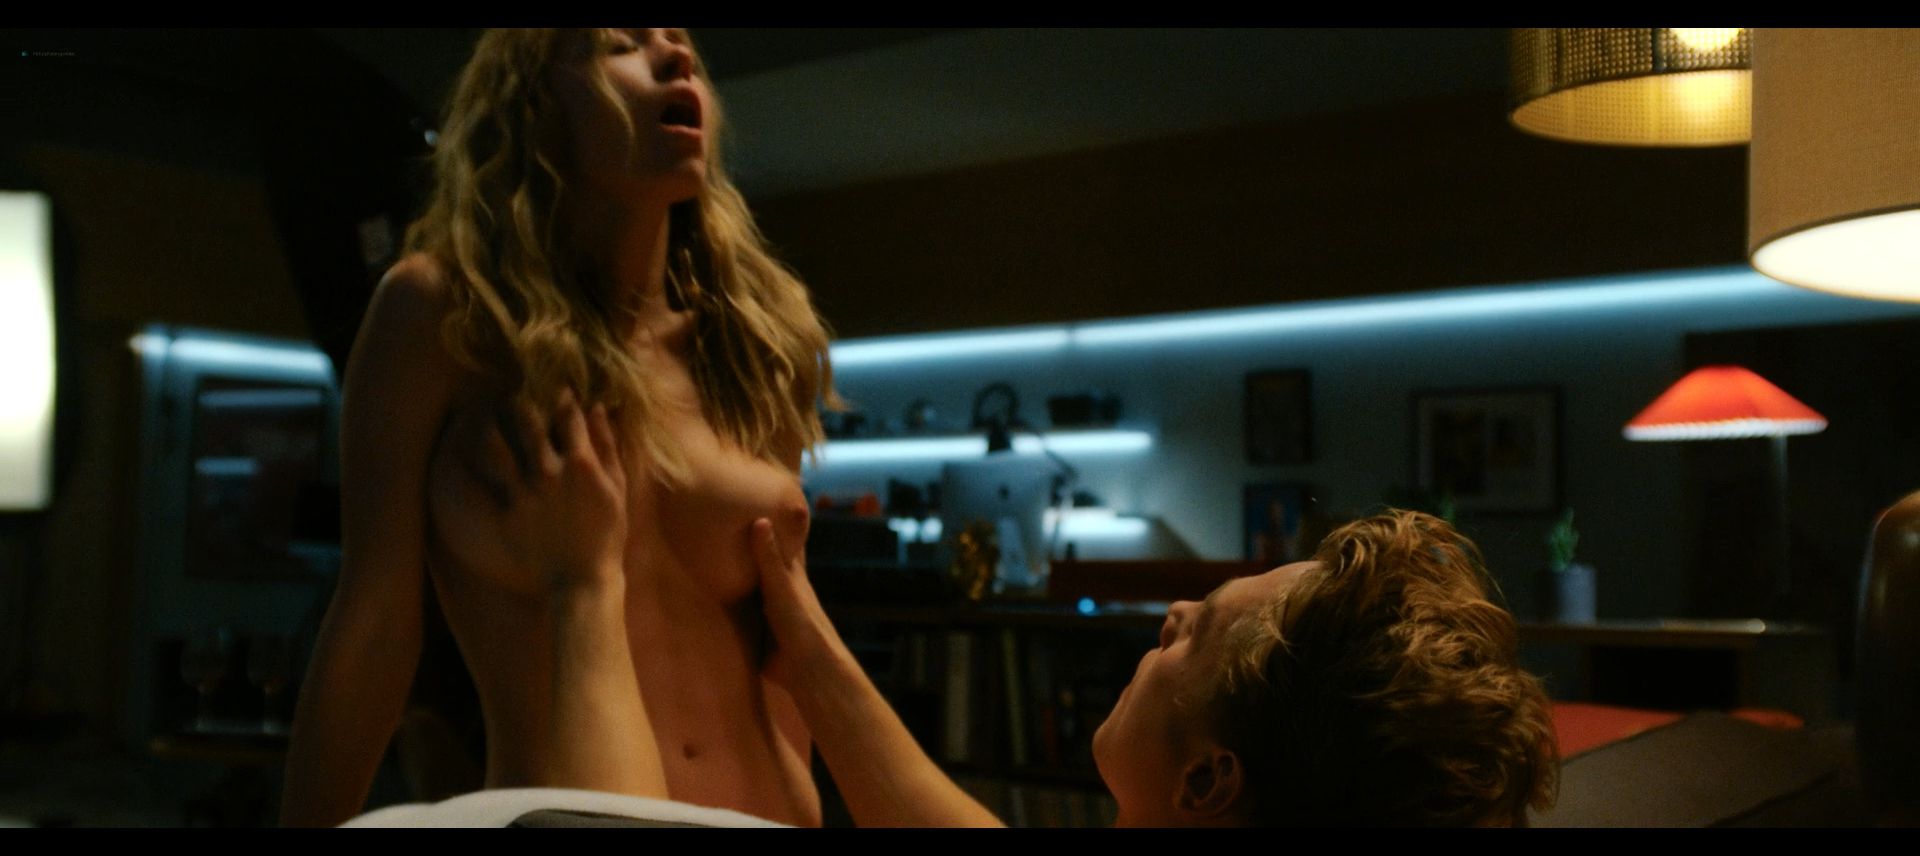 Sydney Sweeney - Perfect Topless Boobs in "The Voyeurs" Movie Cap...